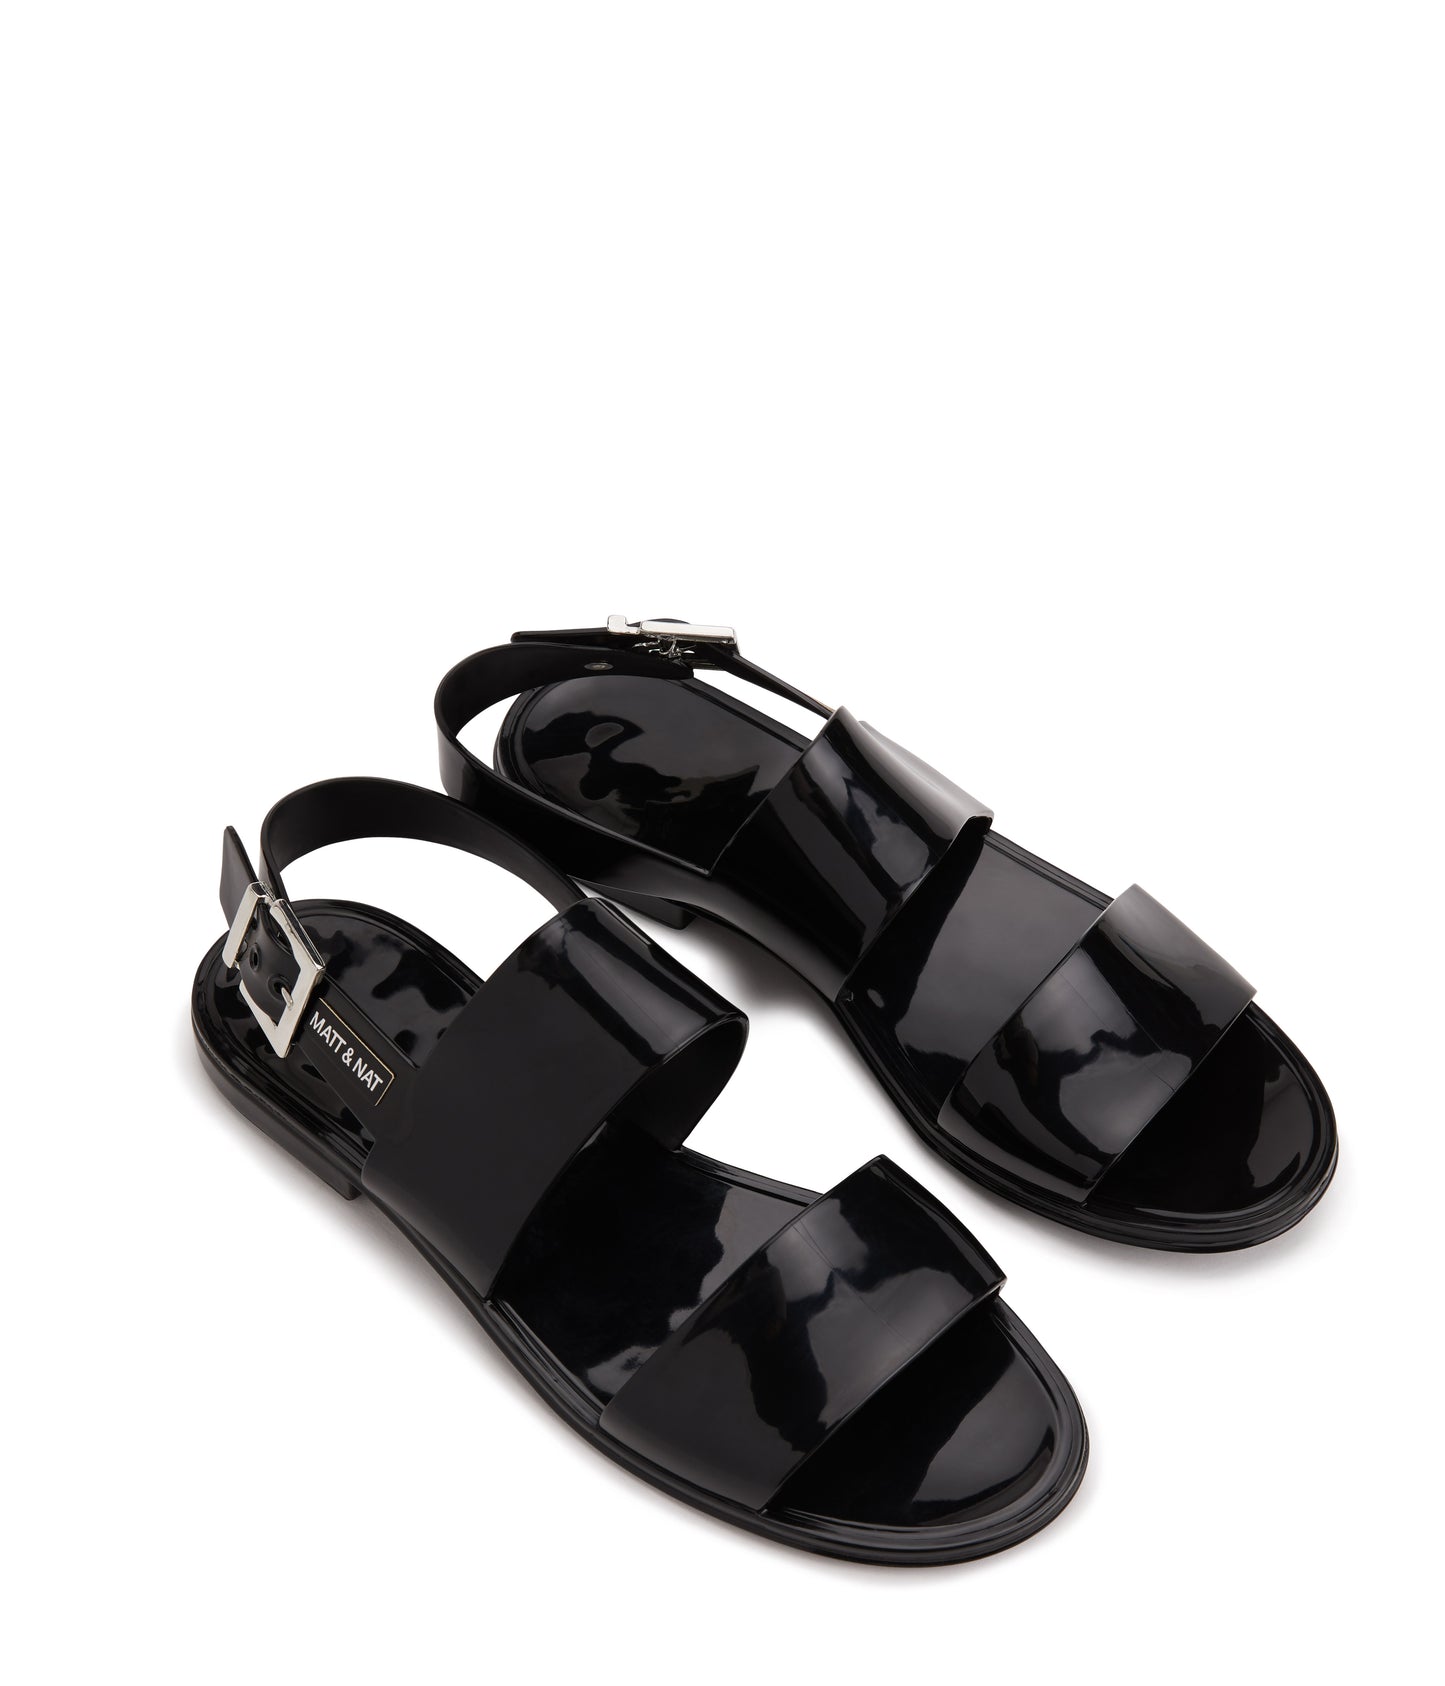 variant::noir -- glam shoe noir